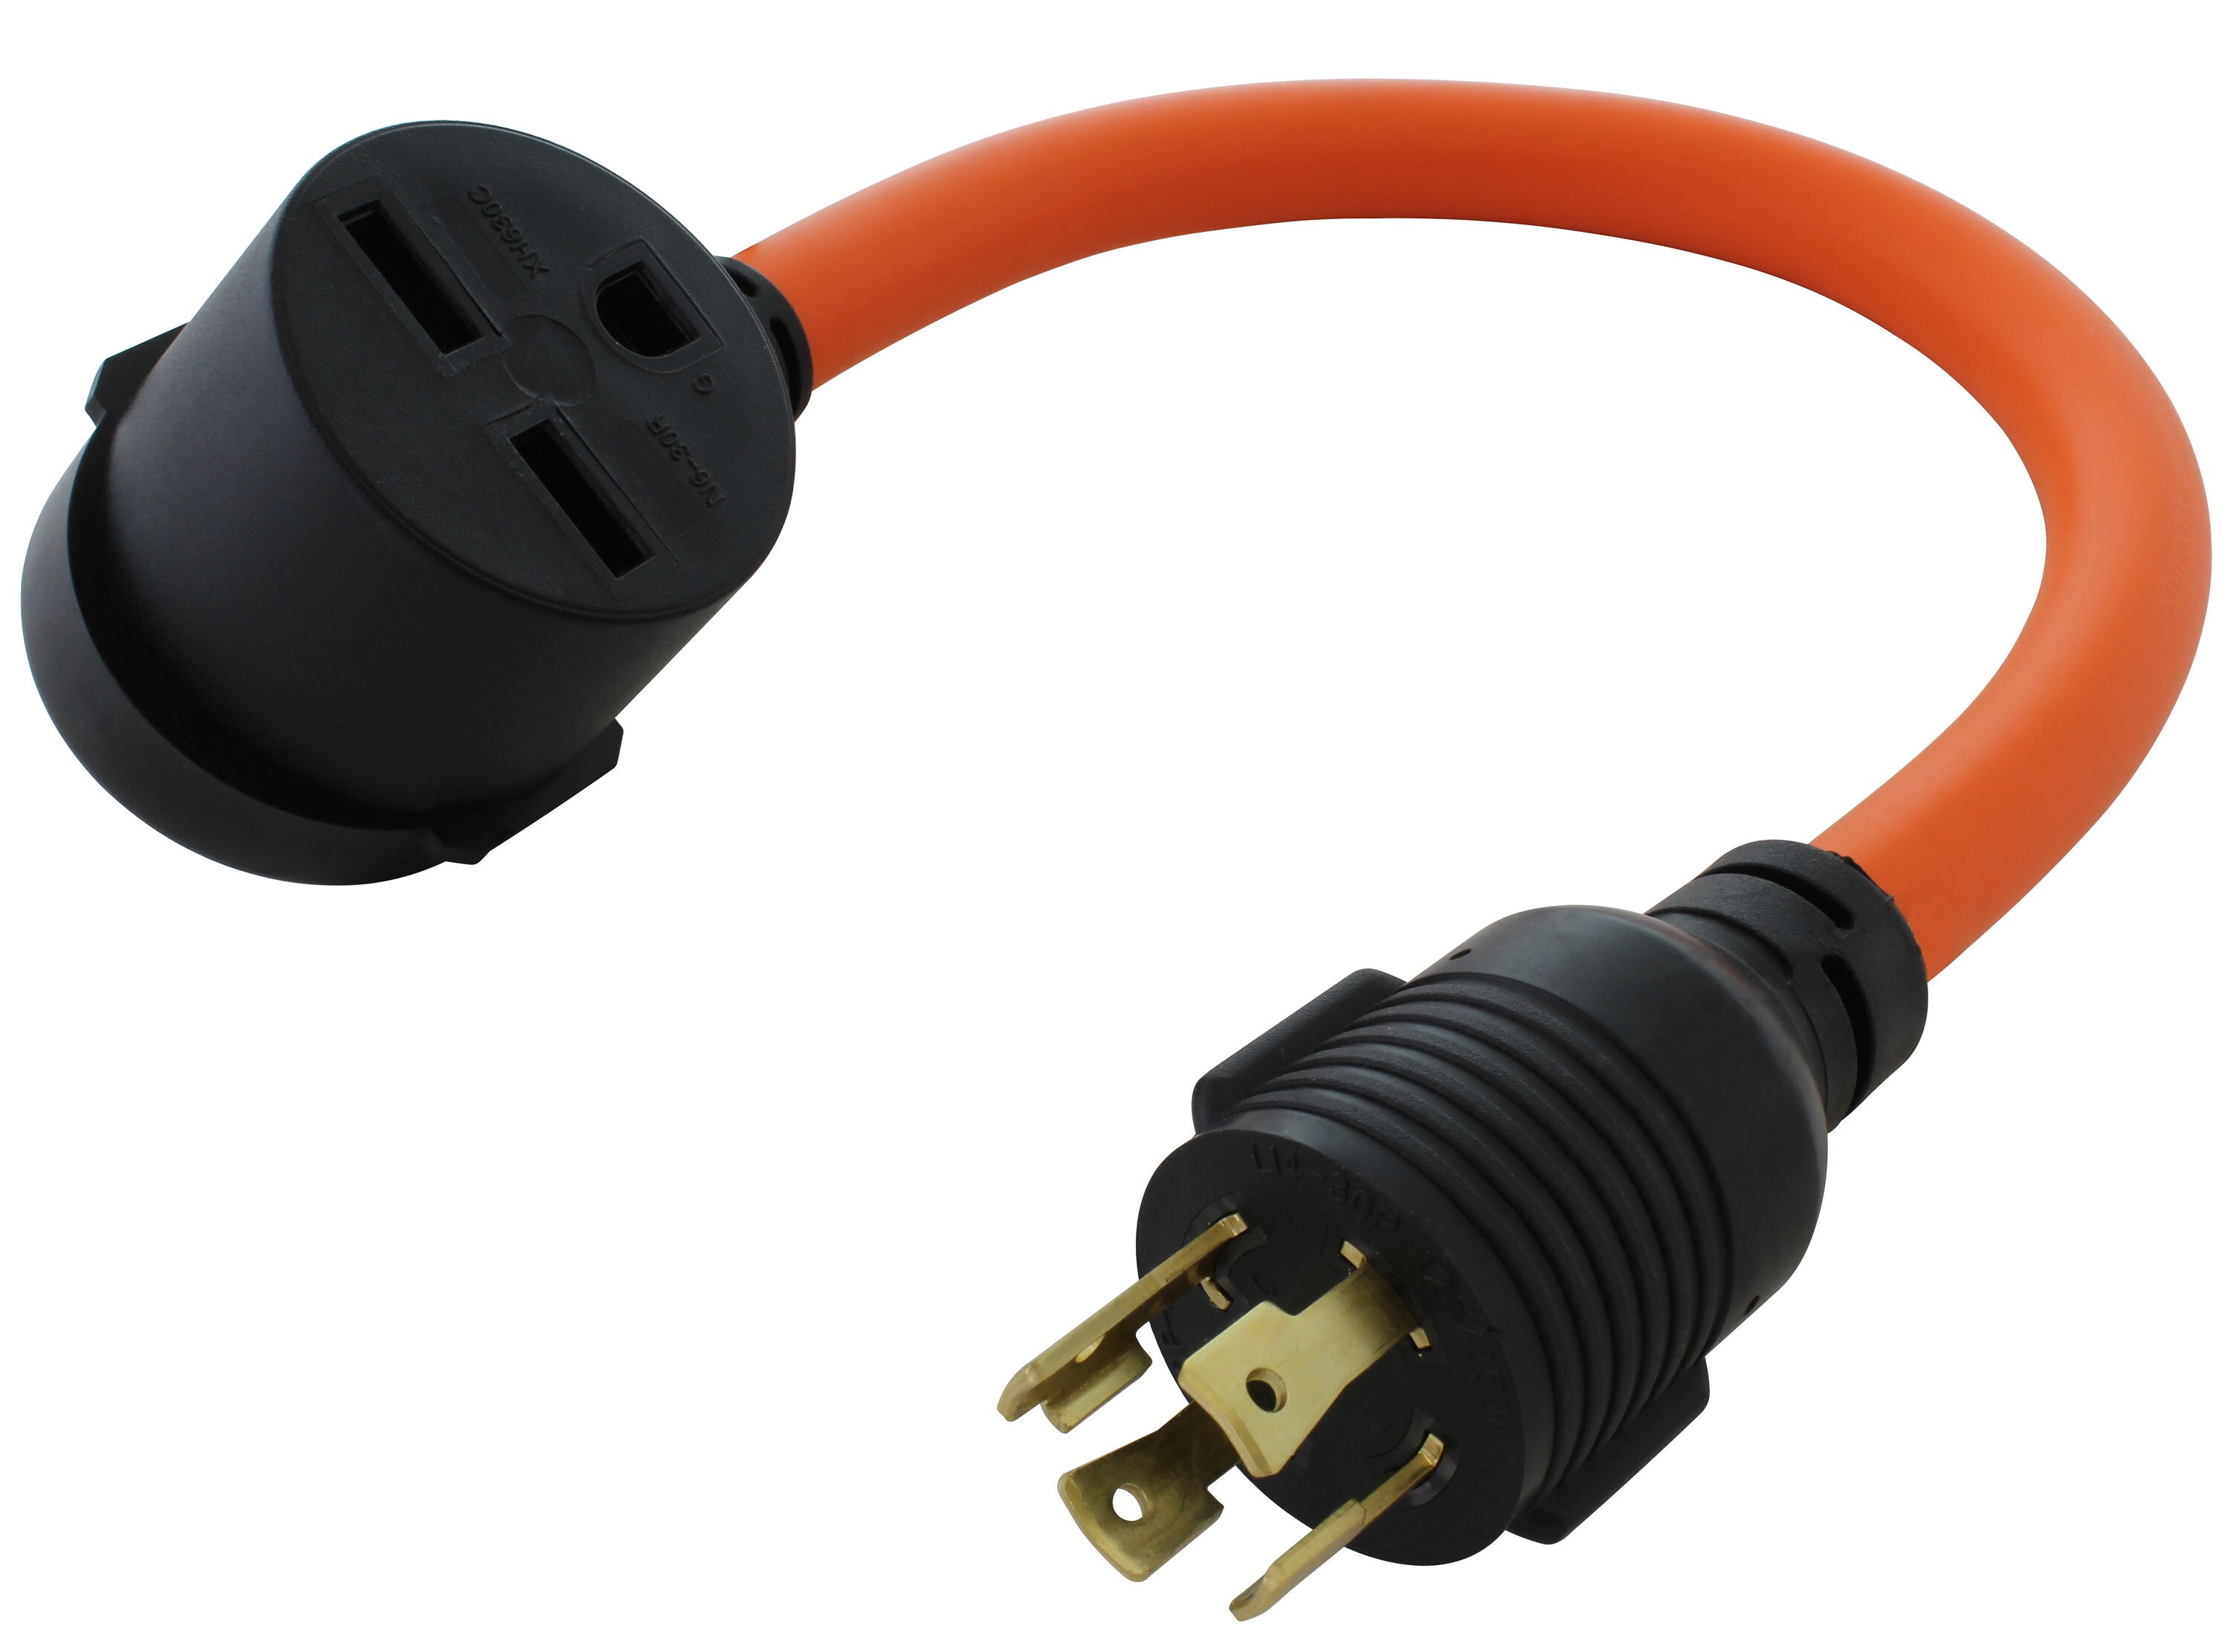 AC WORKS 1.5ft NEMA L14-30P to NEMA 6-30R 30-Amp 4-wire To 3-wire Grounding Single To Single Orange Basic Flexible Adapter